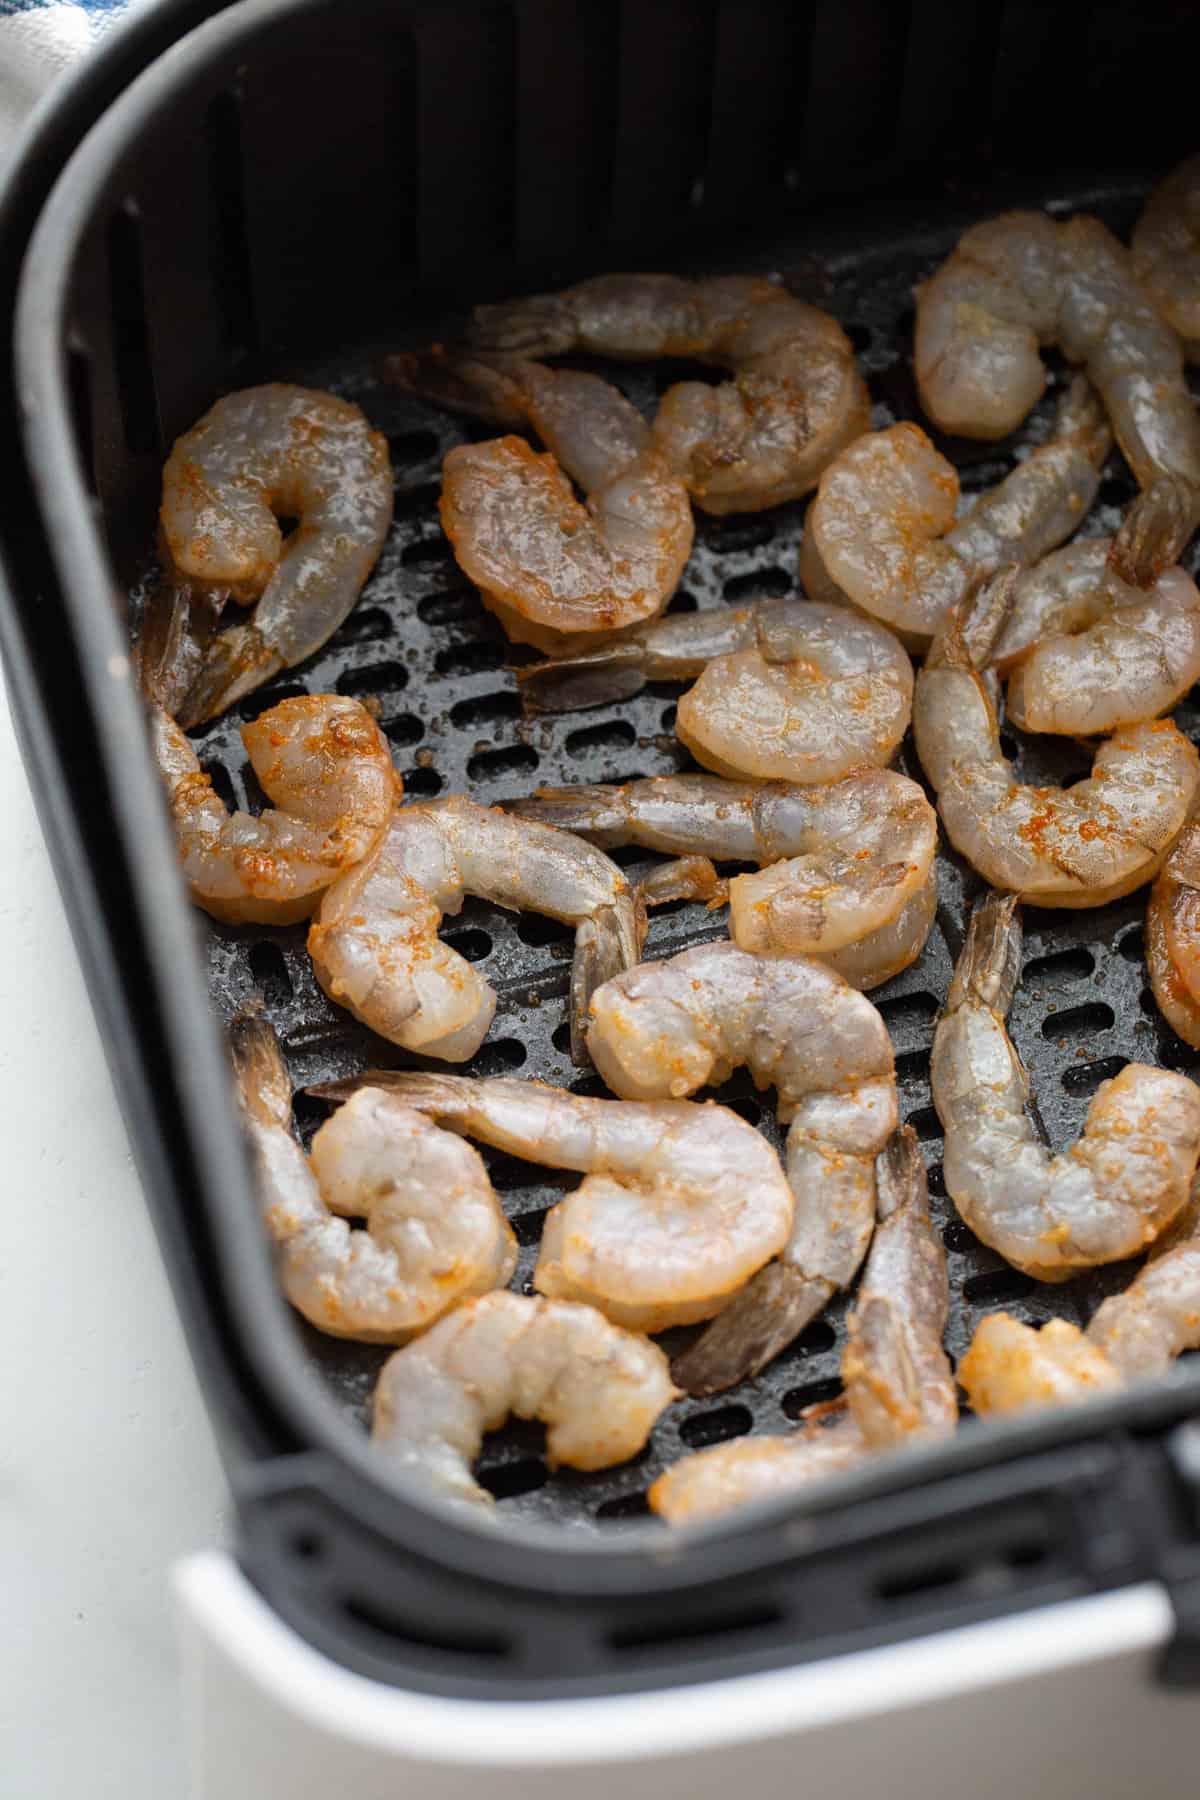 Raw shrimp in an air fryer basket.